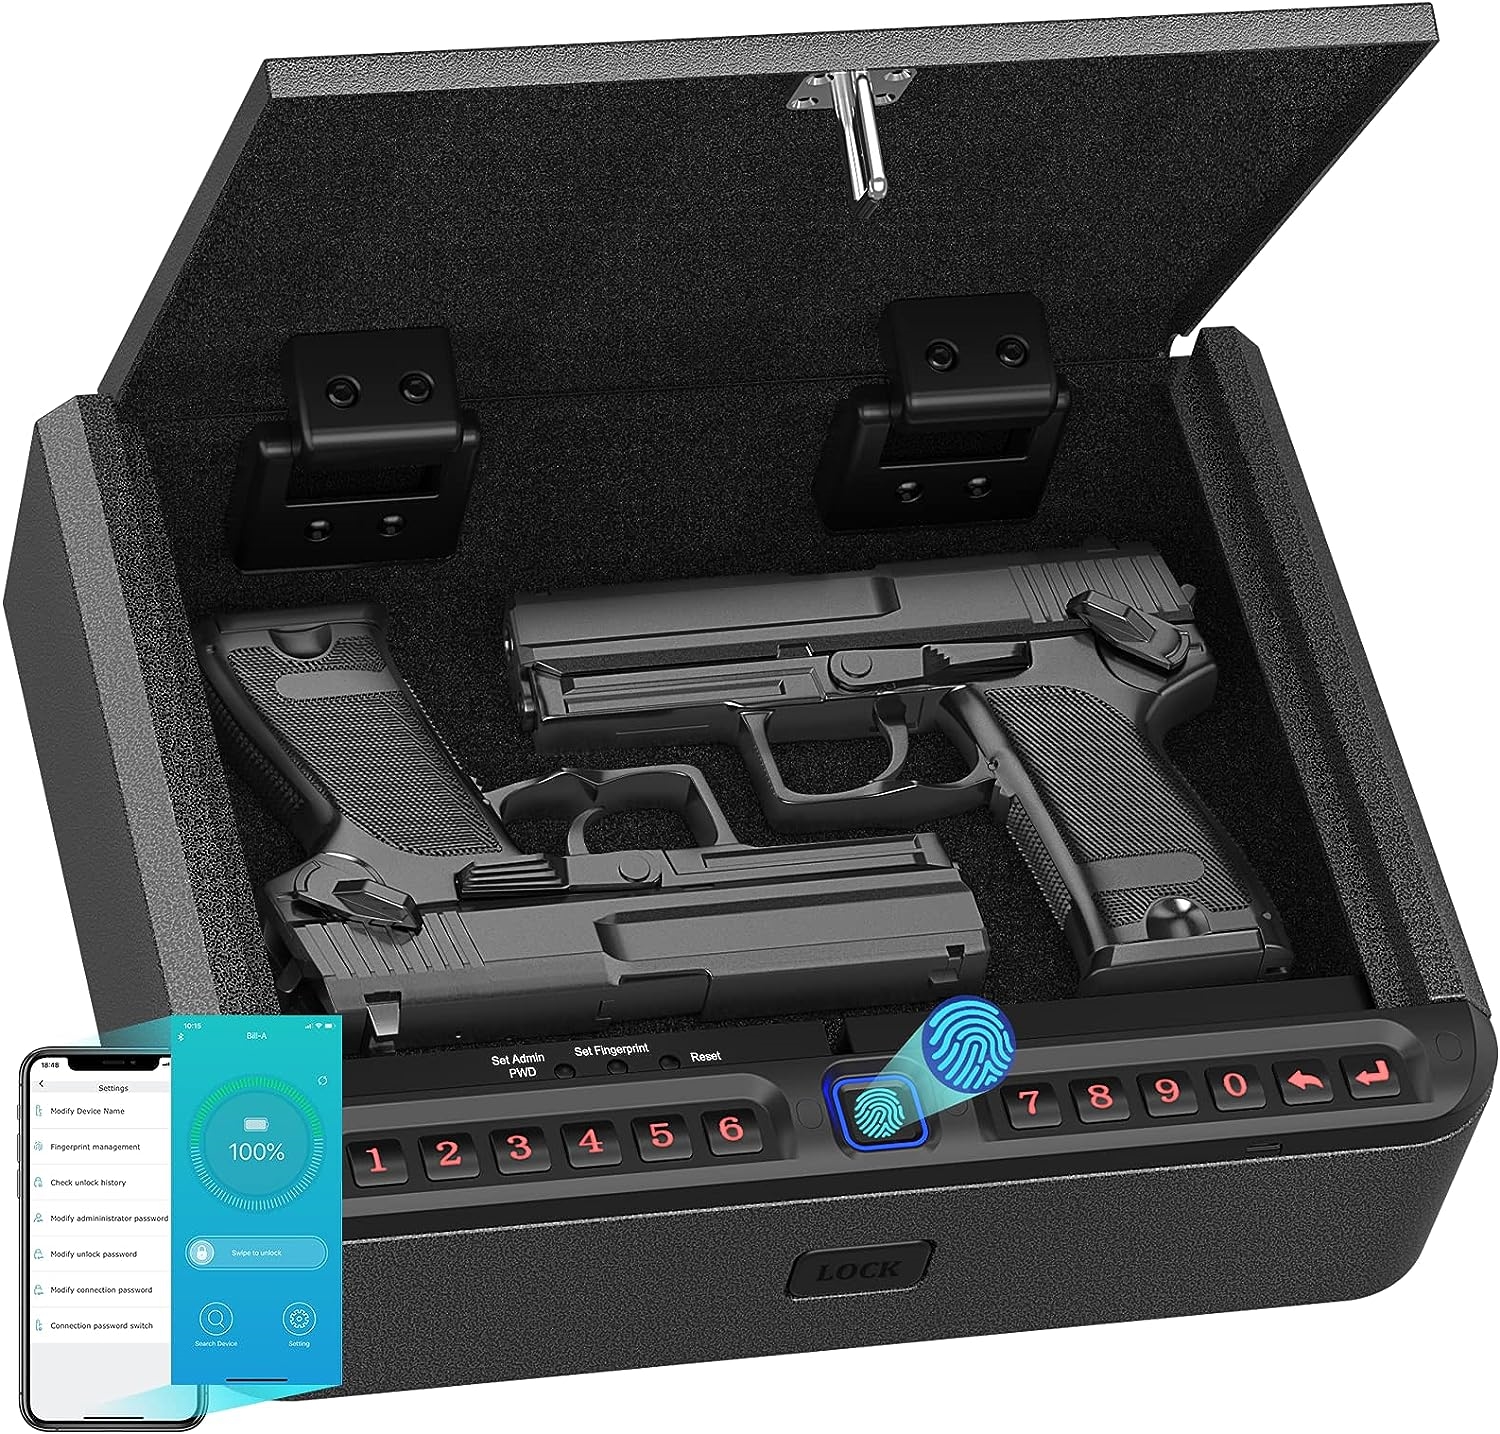 BILLCONCH Gun Safe for Pistols | DeviceDaily.com